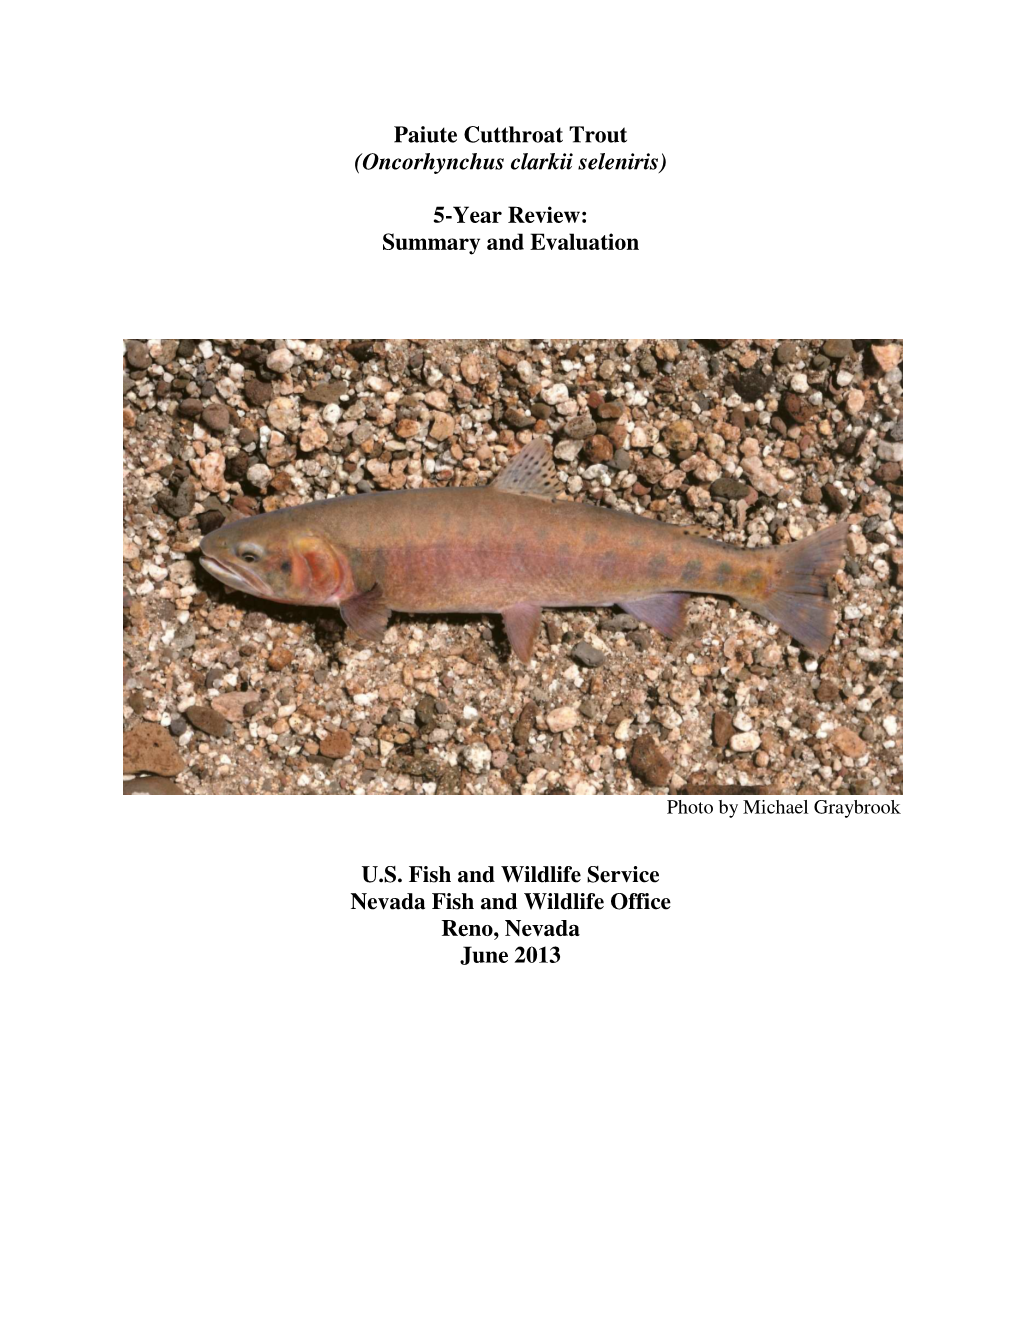 Paiute Cutthroat Trout (Oncorhynchus Clarkii Seleniris) 5-Year Review